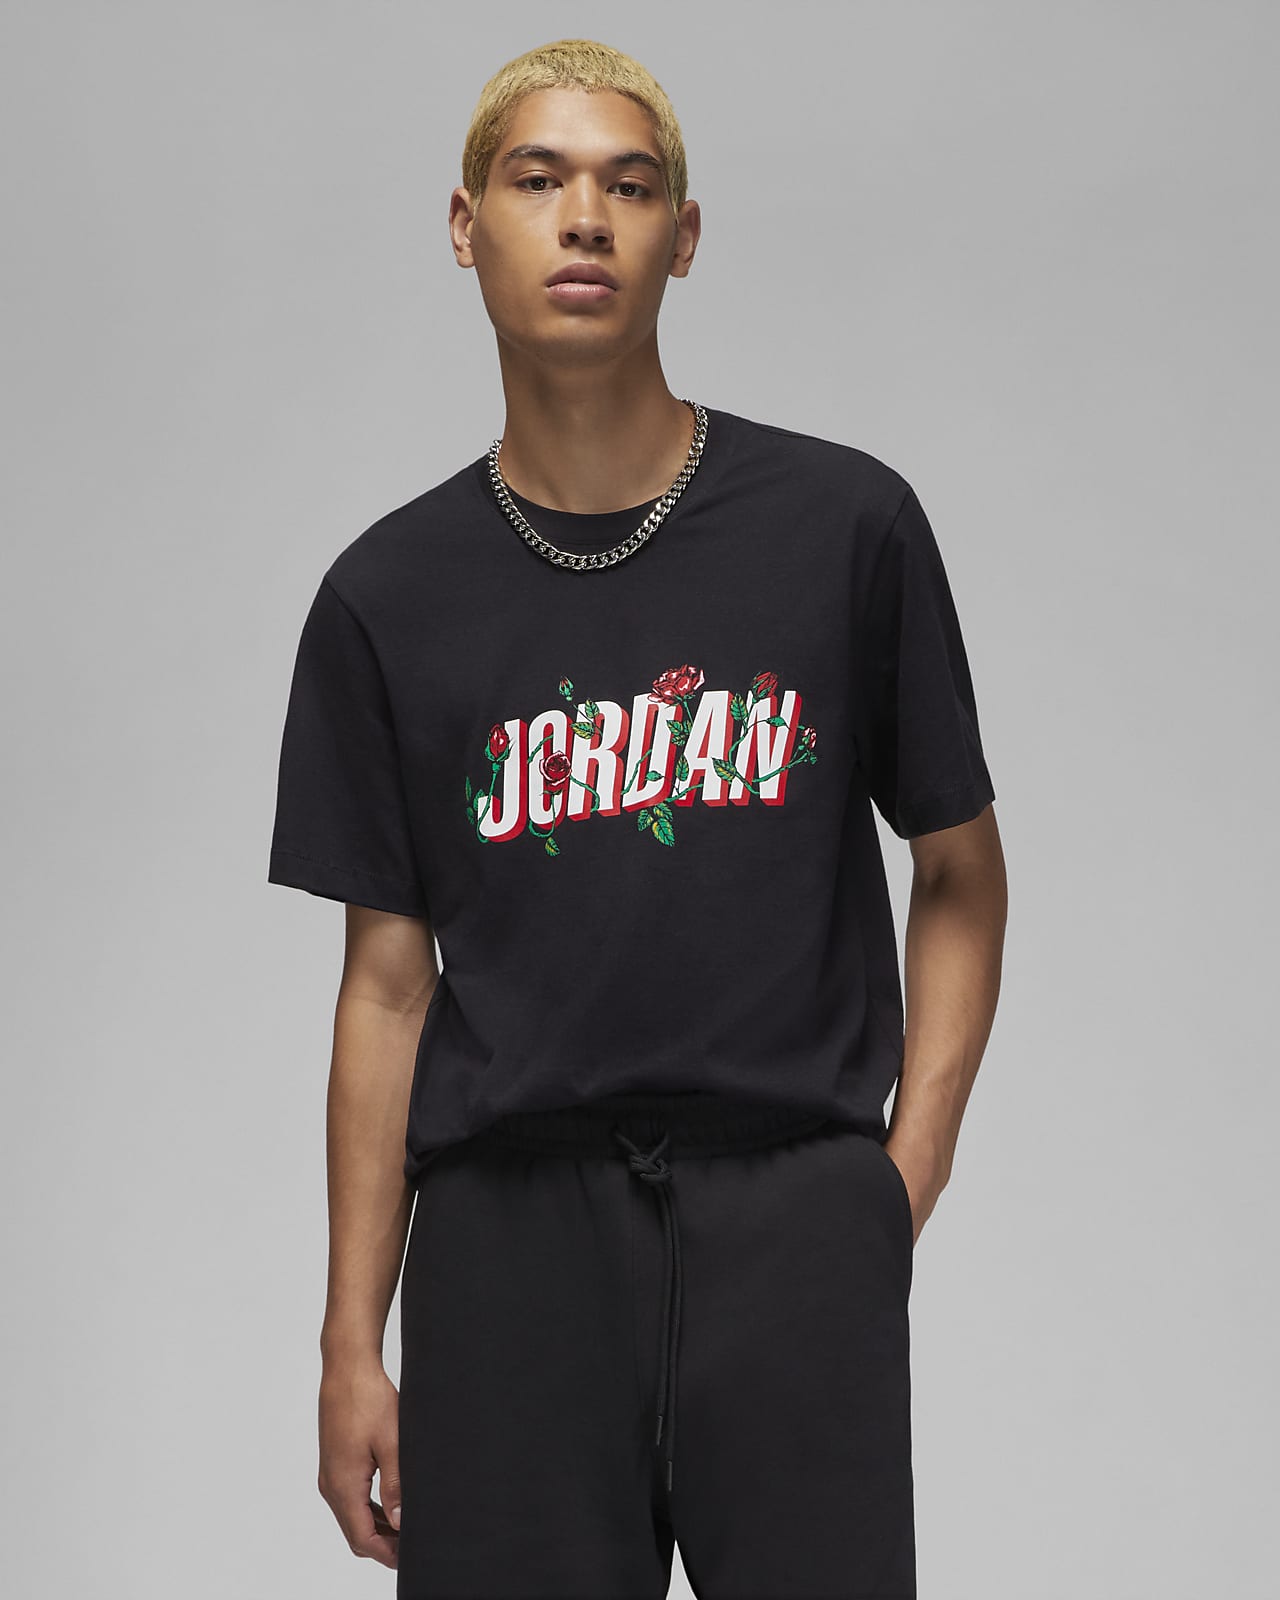 Jordan Brand Sorry Men's T-Shirt